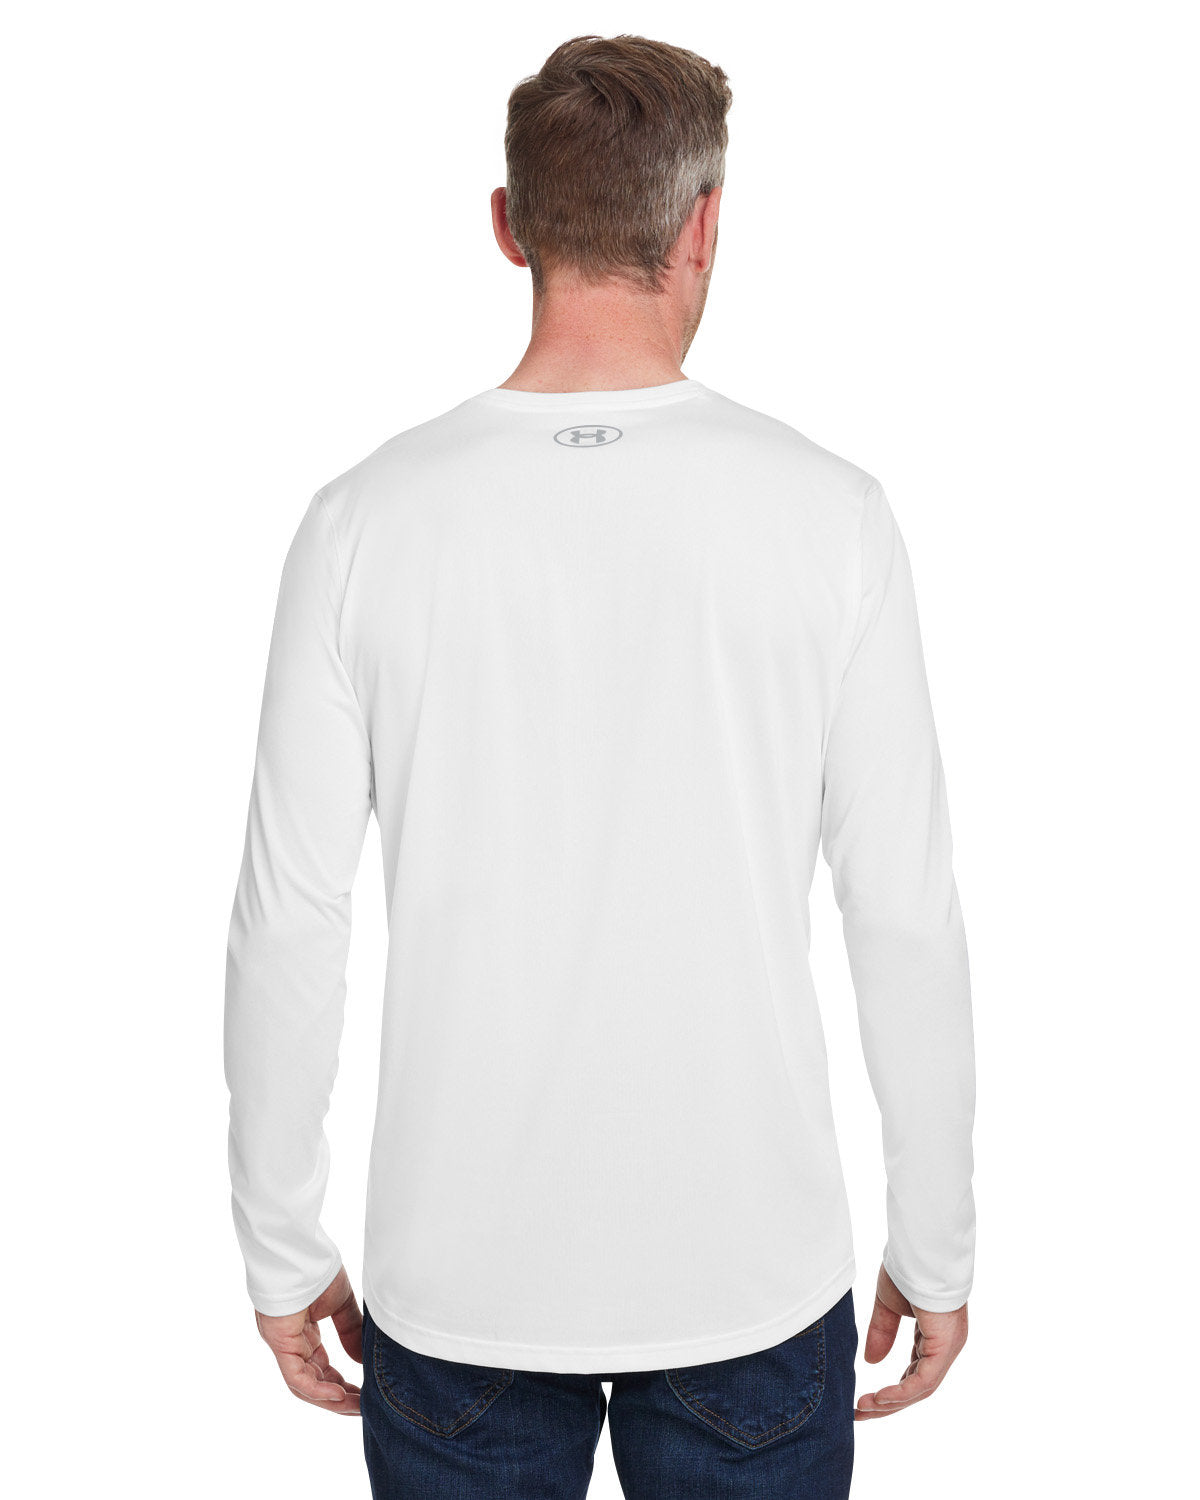 Under Armour Men's Tech Long-Sleeve Custom T-Shirts, White